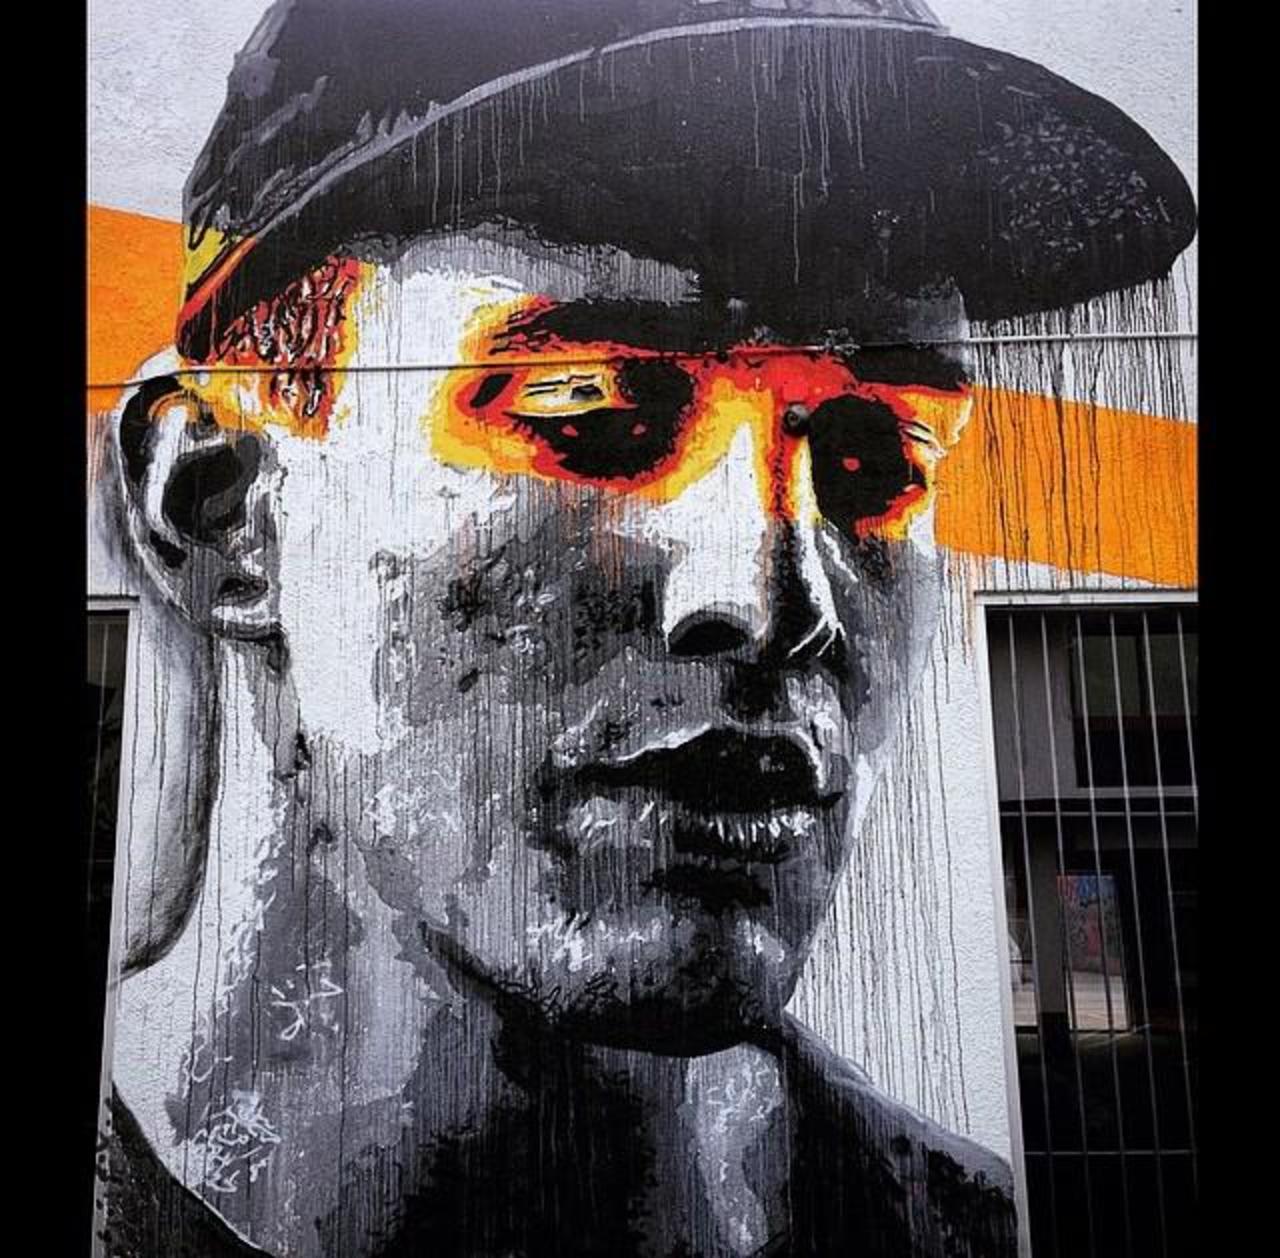 Artist Nils Westergard Street Art portrait in Miami 

#art #graffiti #mural #streetart http://t.co/epAIjwNK7Y